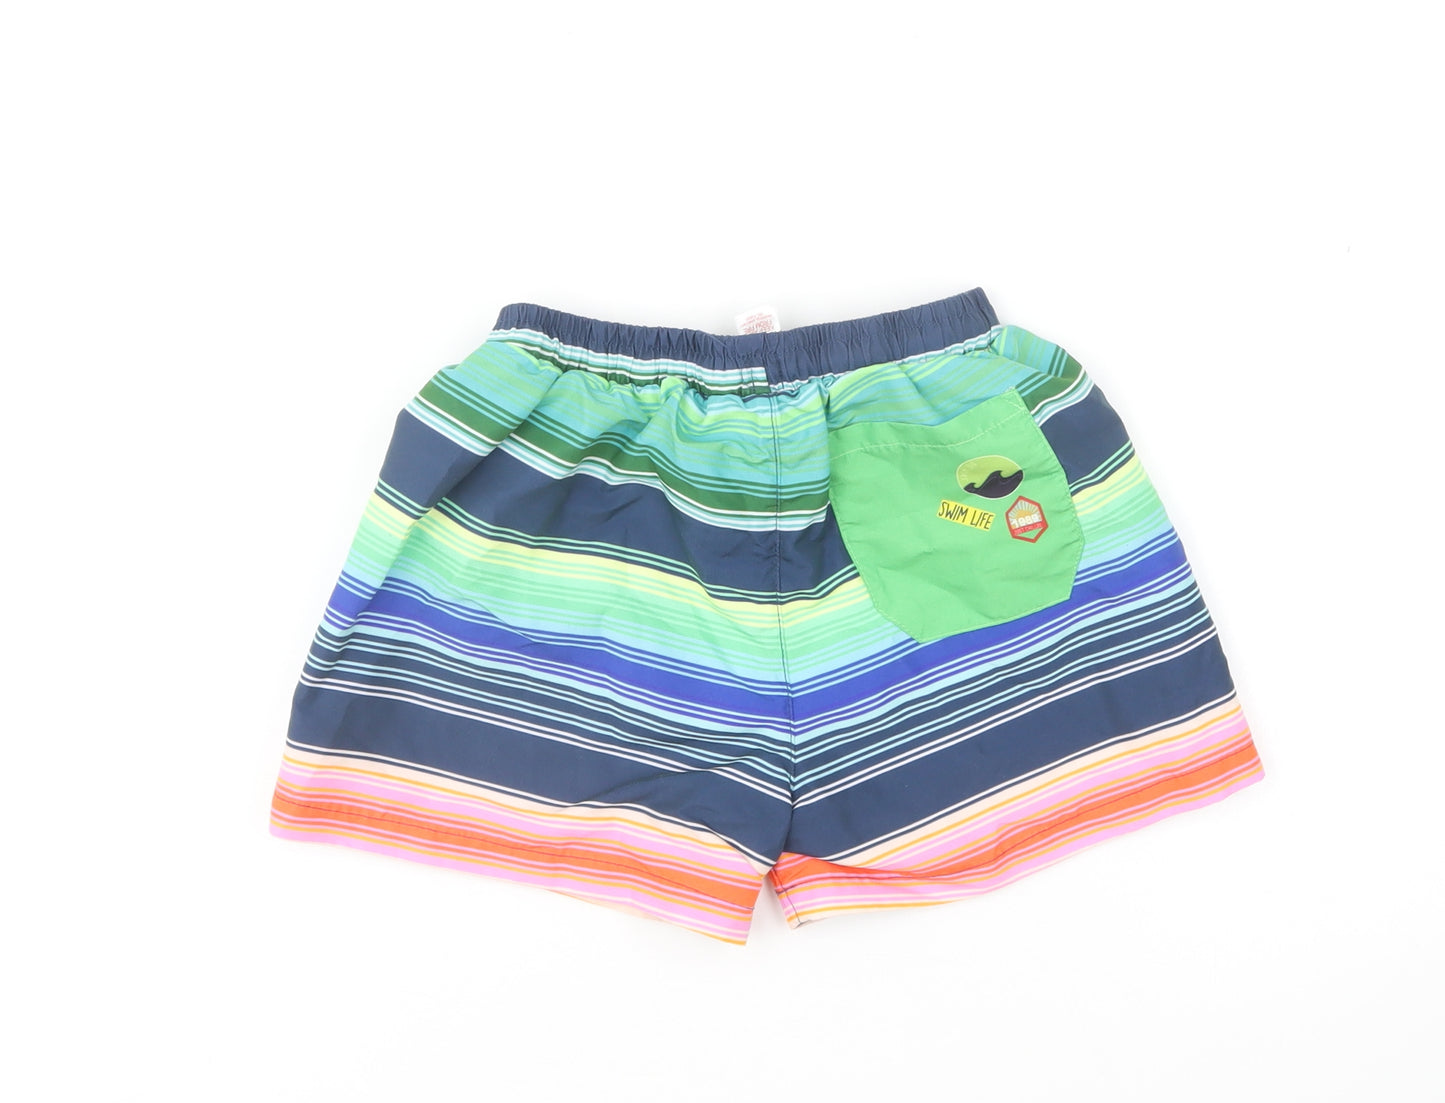 Leigh Tucker Boys Multicoloured Striped Polyester Sweat Shorts Size 6-7 Years Regular Drawstring - Swim Shorts